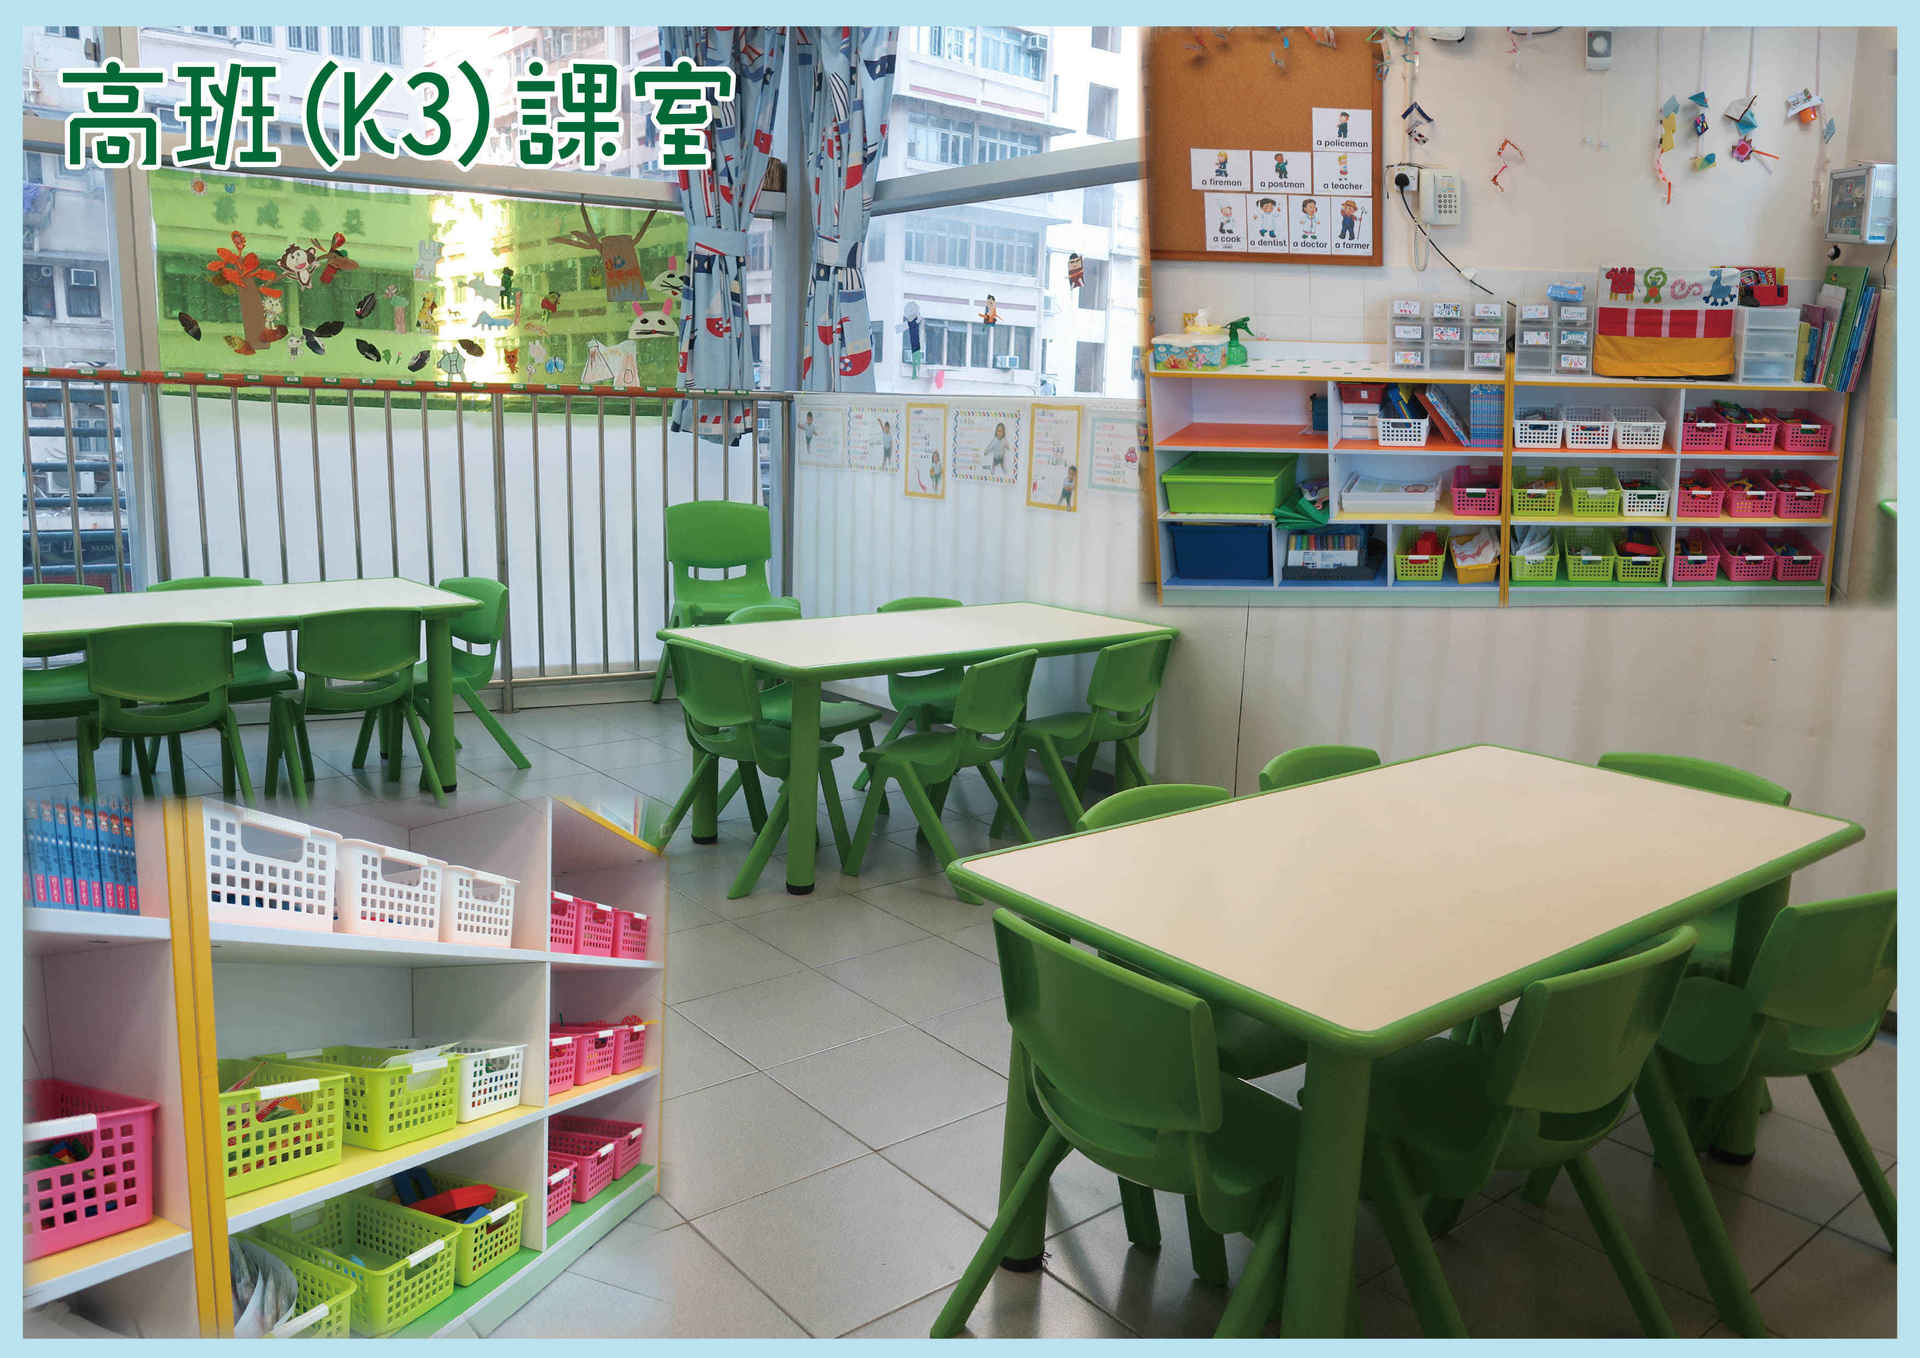 K3 Classroom